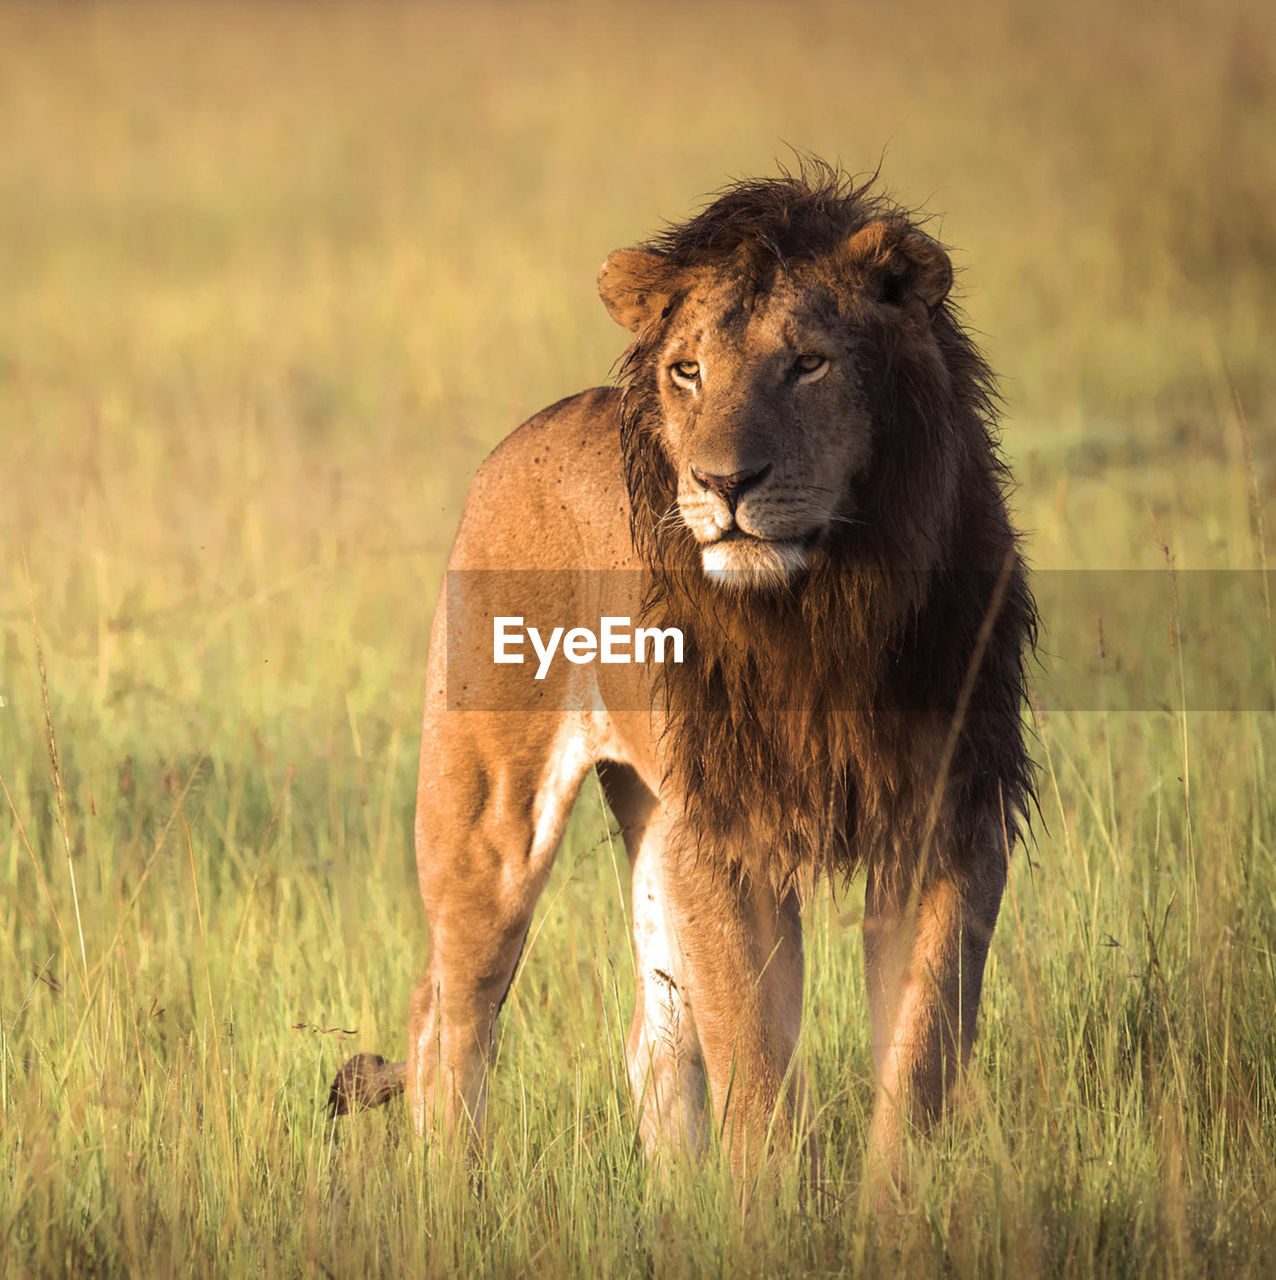 Lion standing in a field